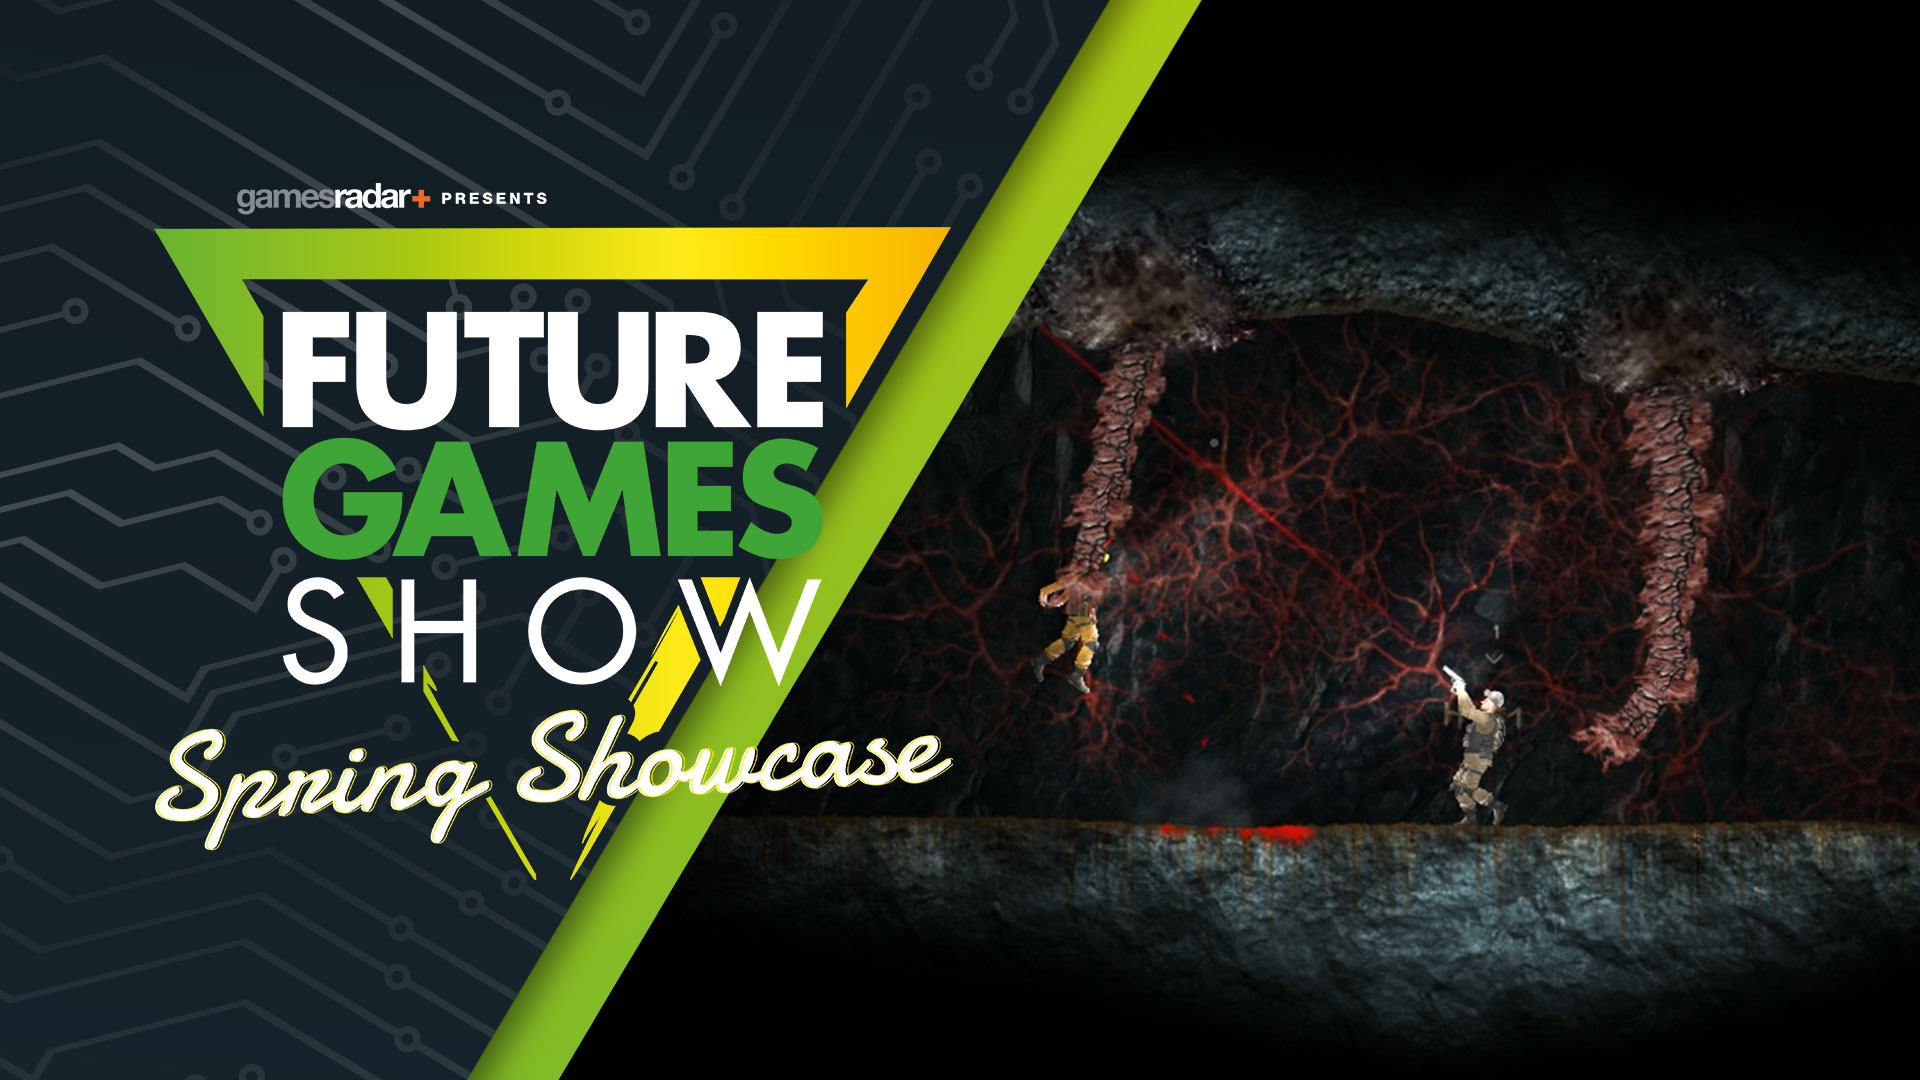 Future gaming show. Future games show. Spirit Future games. Расписание Future games show. Future games show logo.